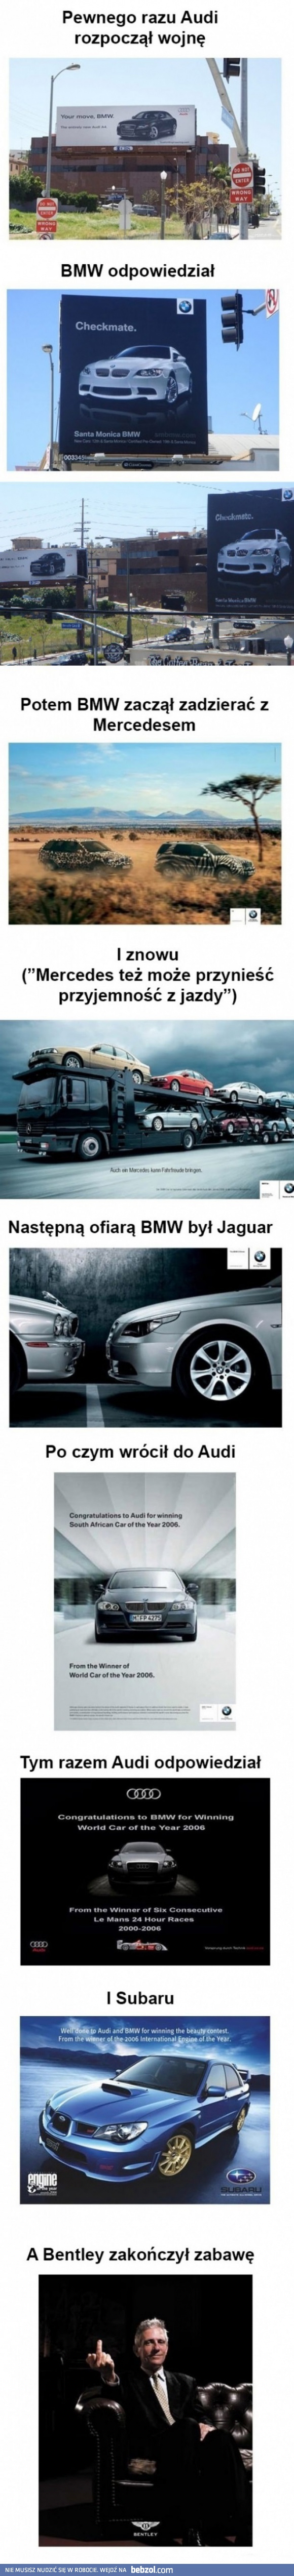 Reklamy Audi vs BMW